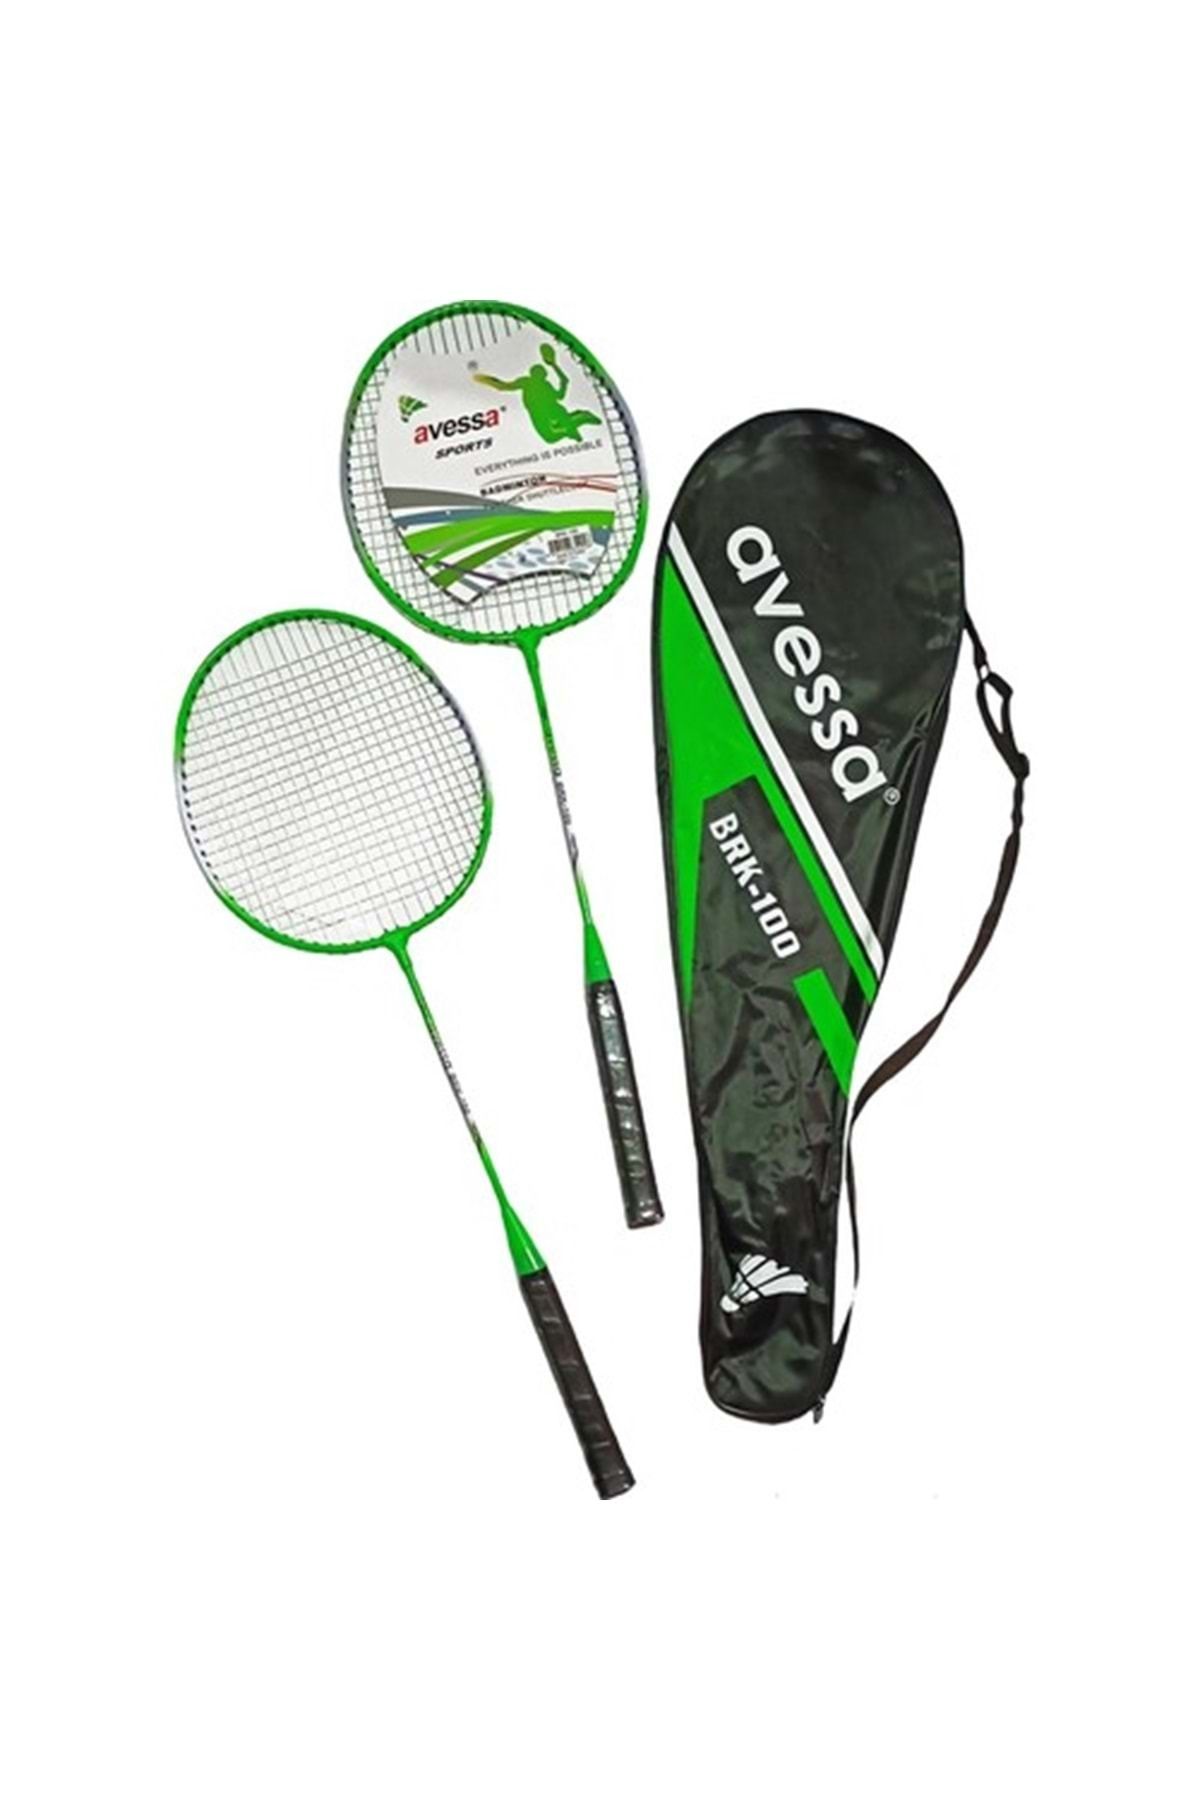 Avessa Badminton Raket Set (2 RAKET) Brk-1000